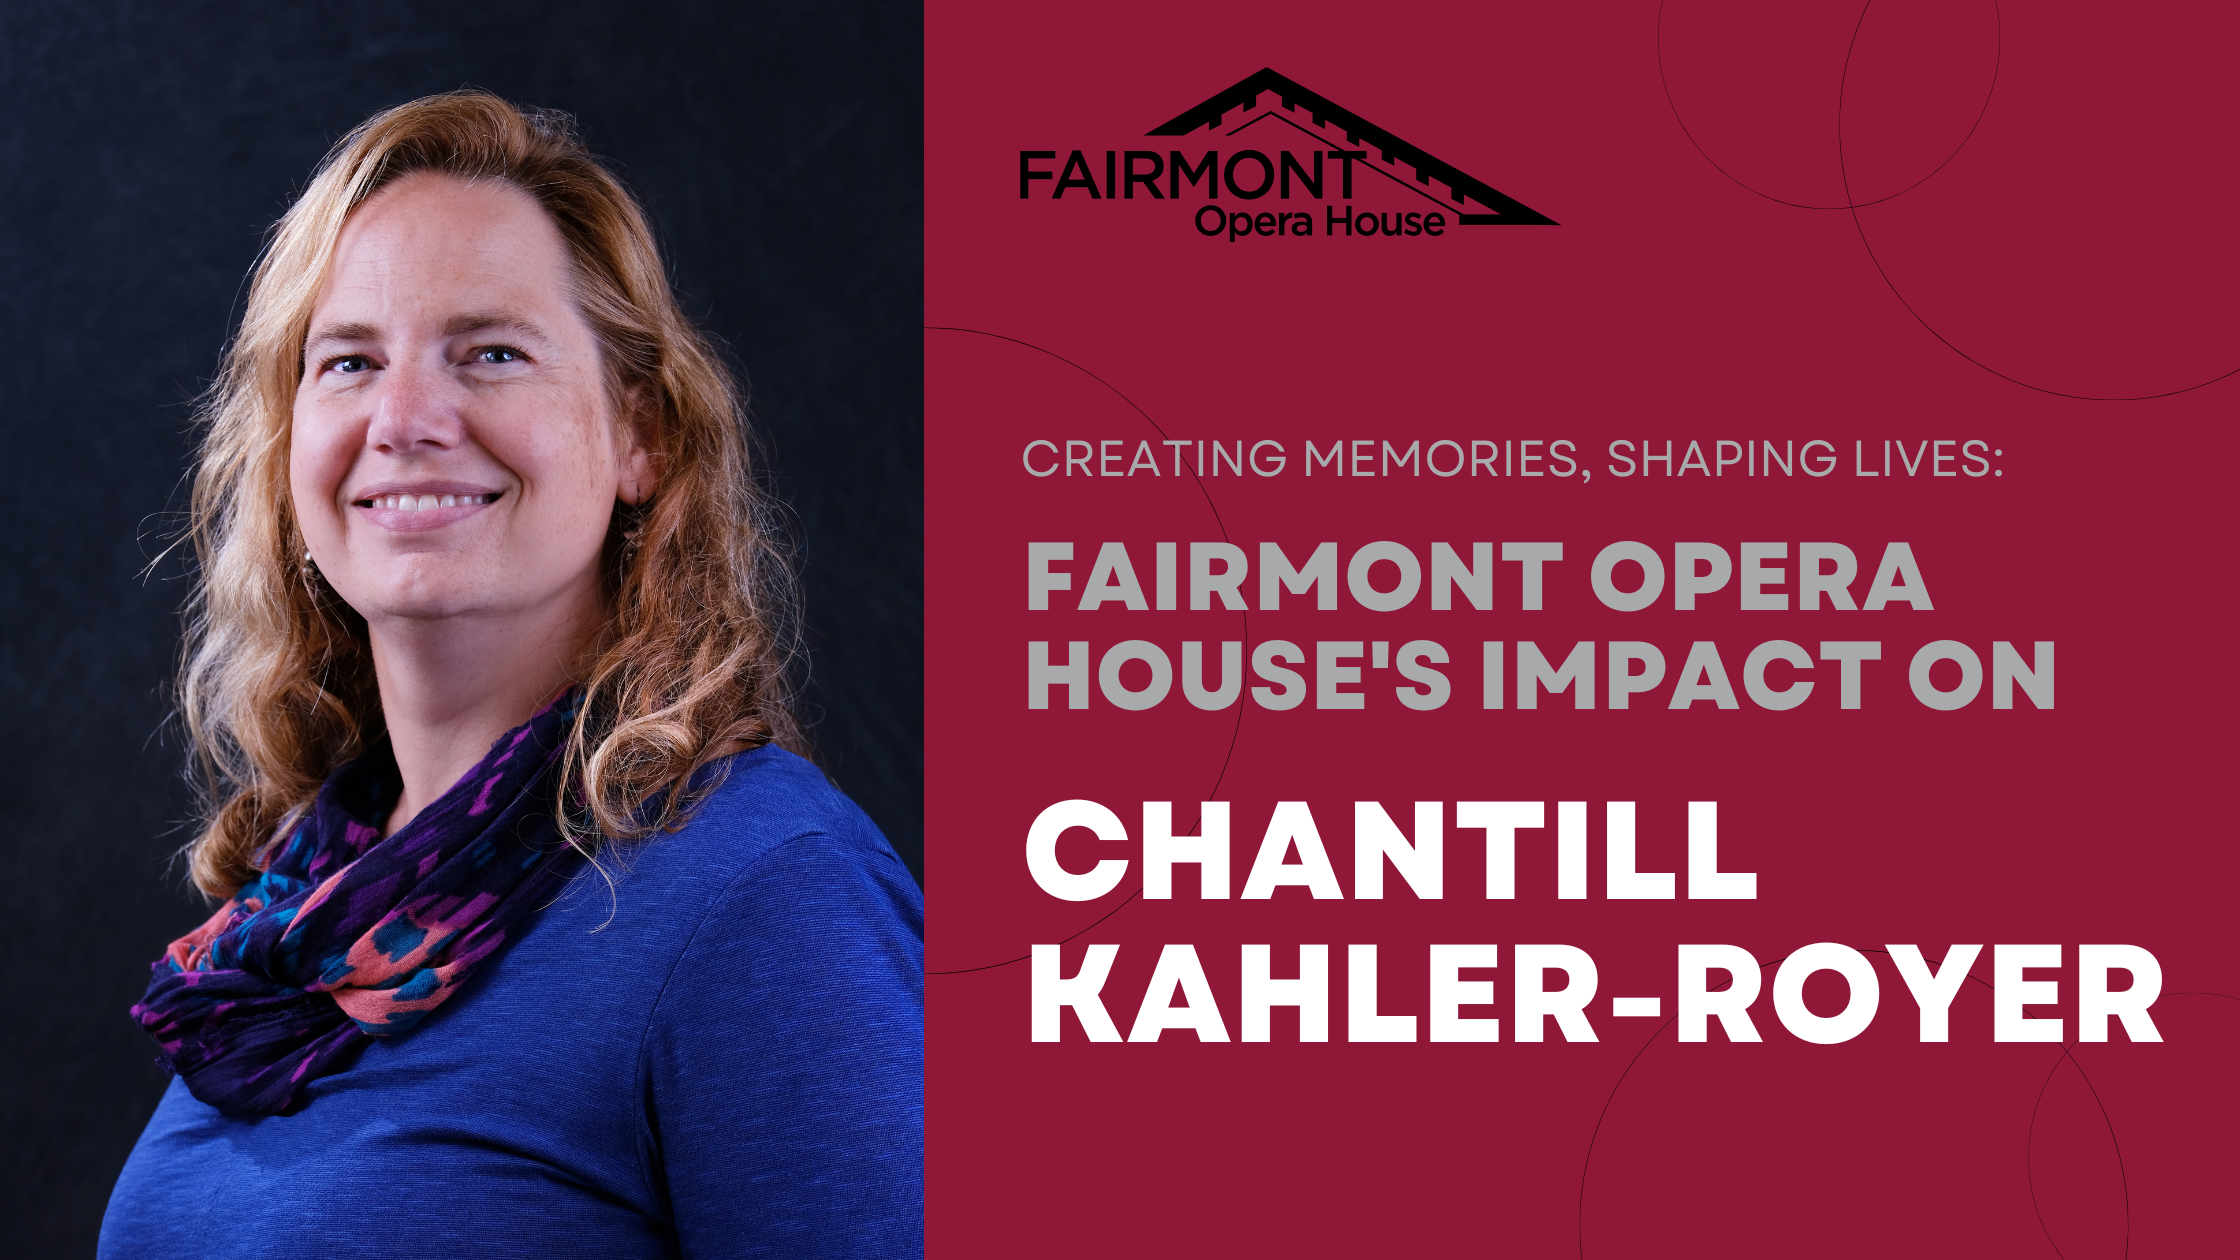 Fairmont Opera House's impact on Chantill Kahler-Royer